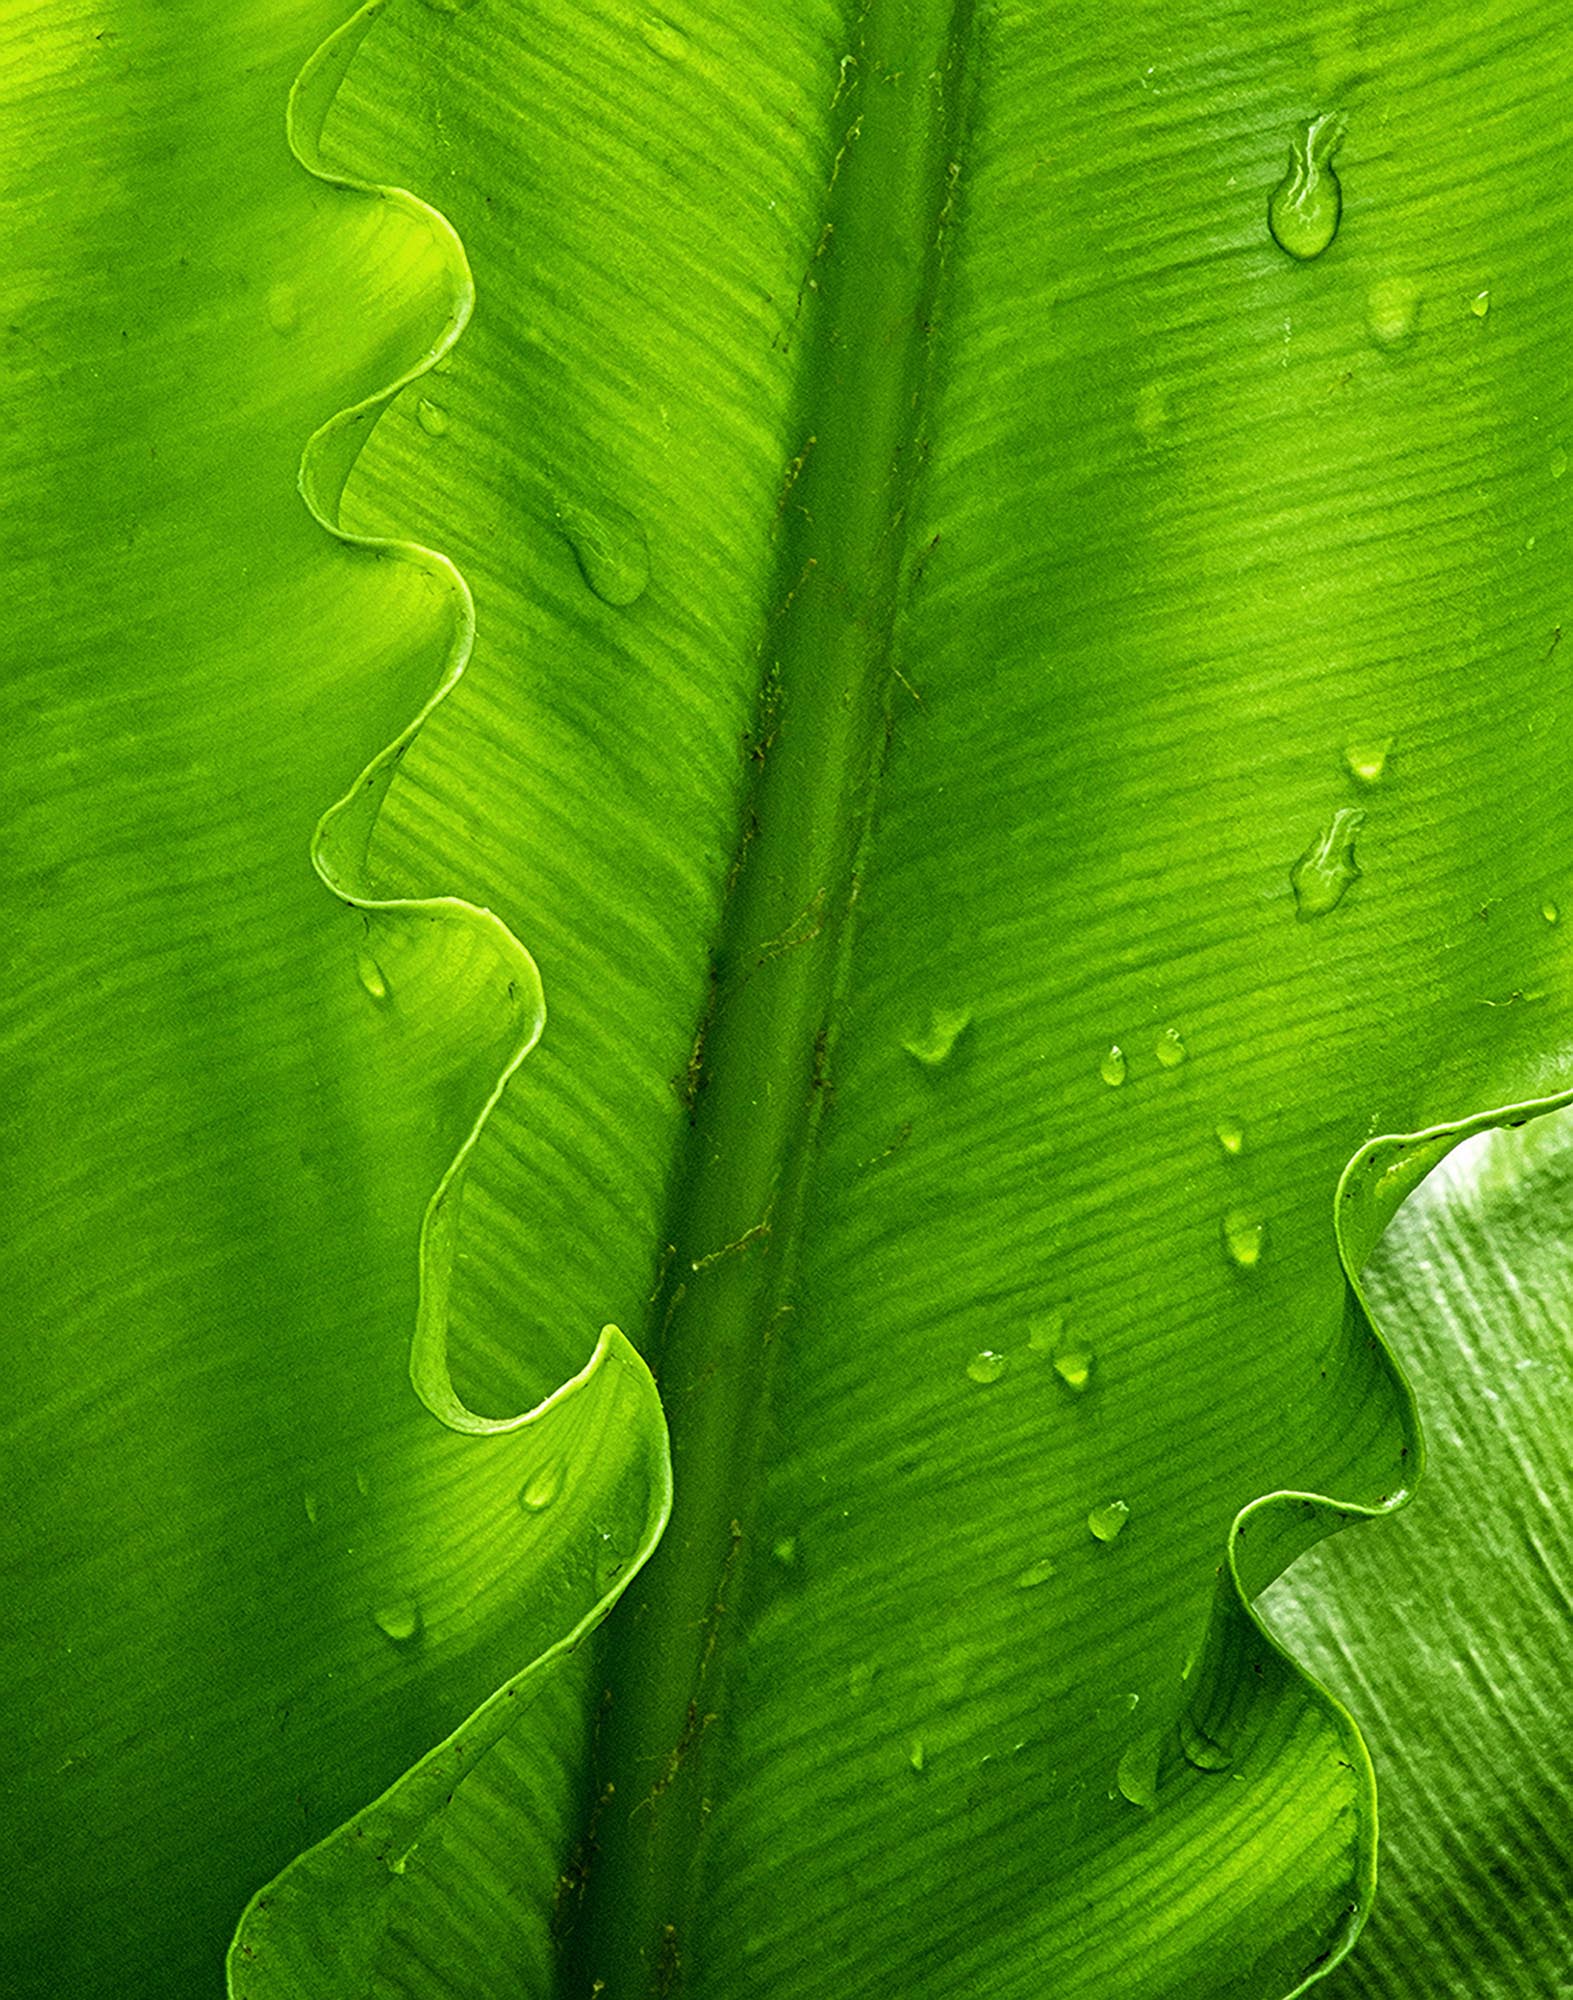 Inside the green leaf